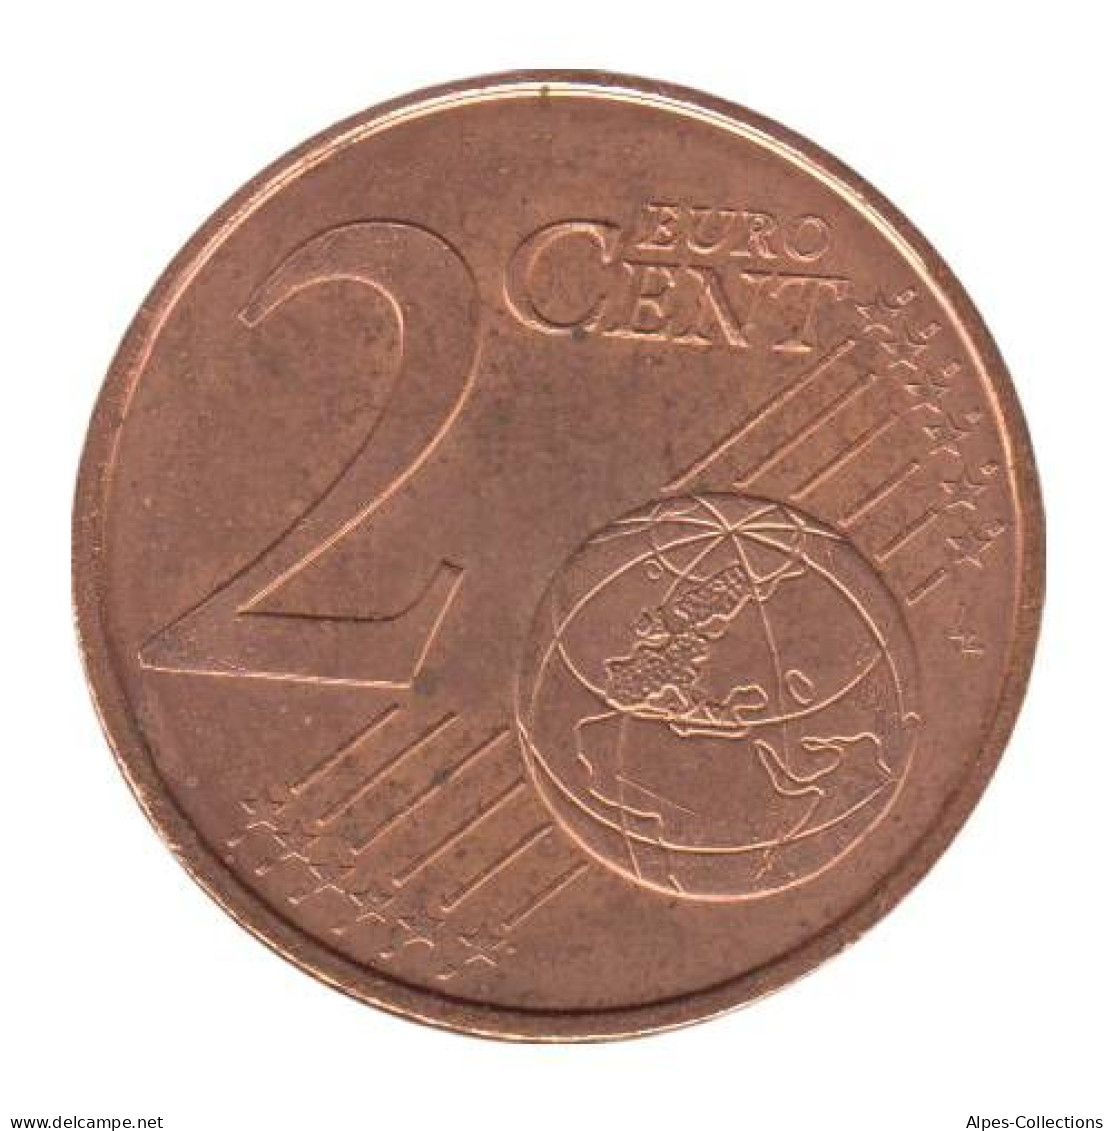 FR00204.1 - FRANCE - 2 Cents - 2004 - Francia